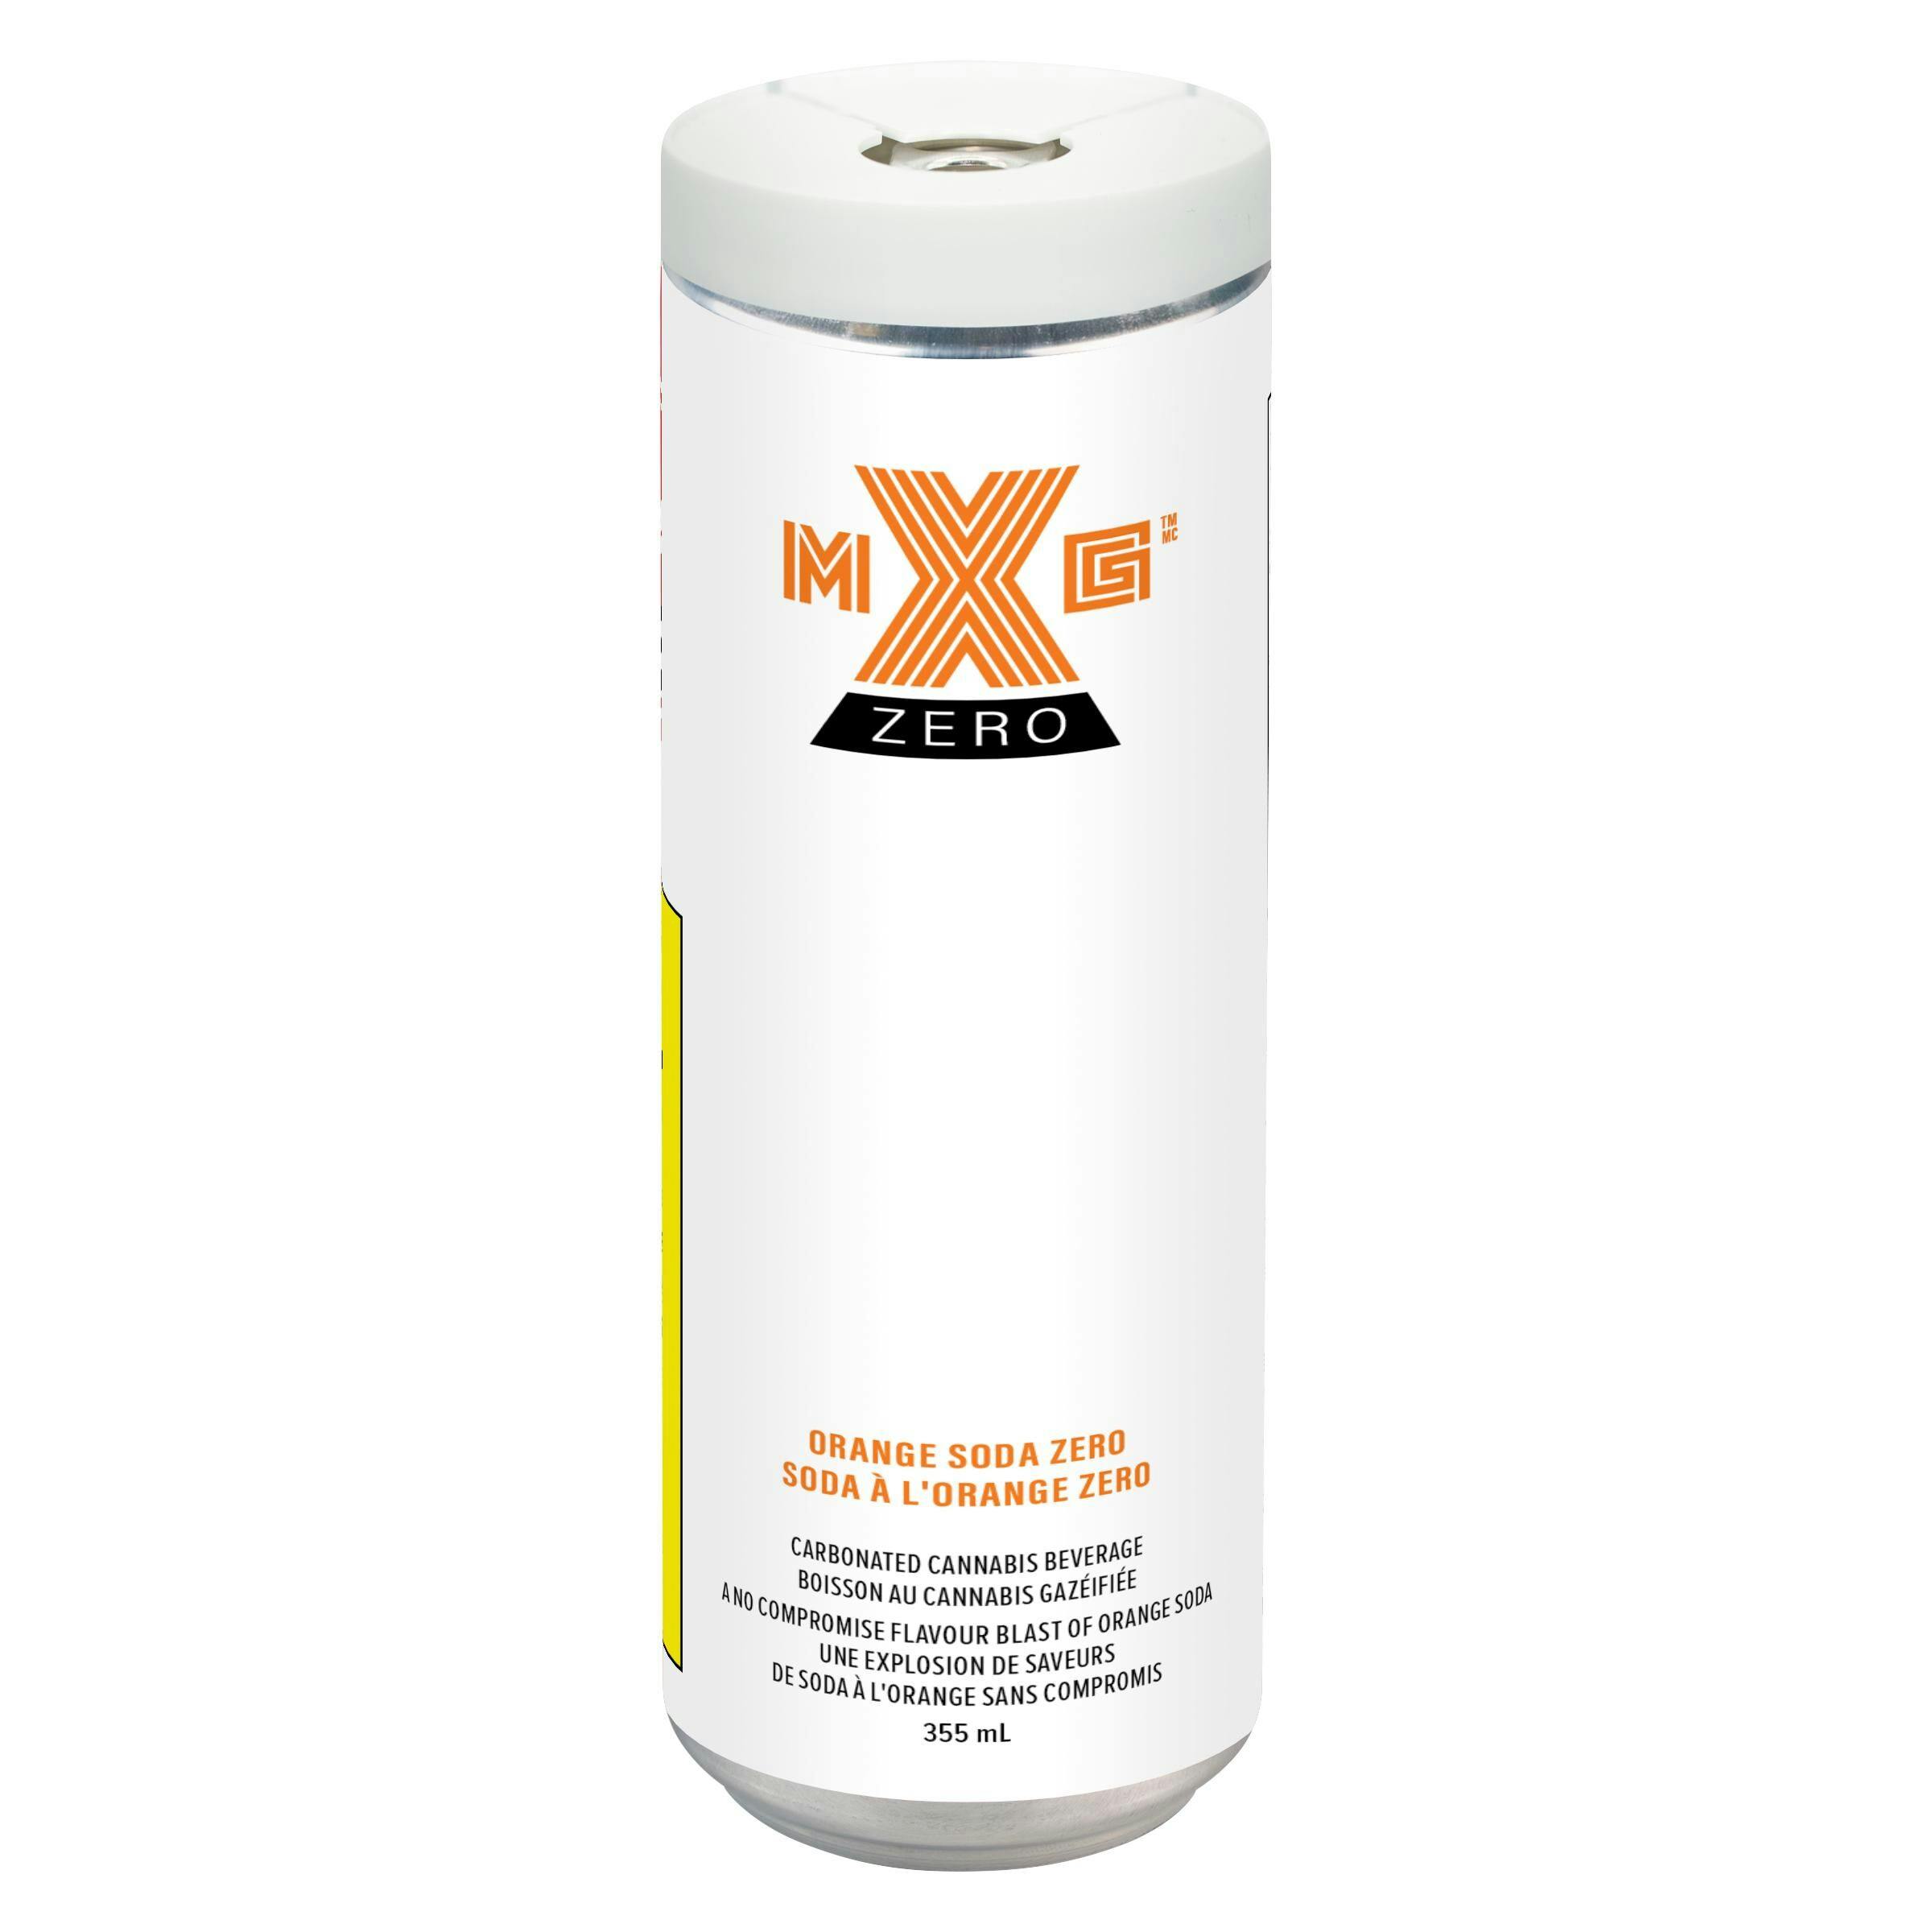 XMG Zero - Orange Soda Zero - Hybrid - 355ml | Cannabis Jacks 